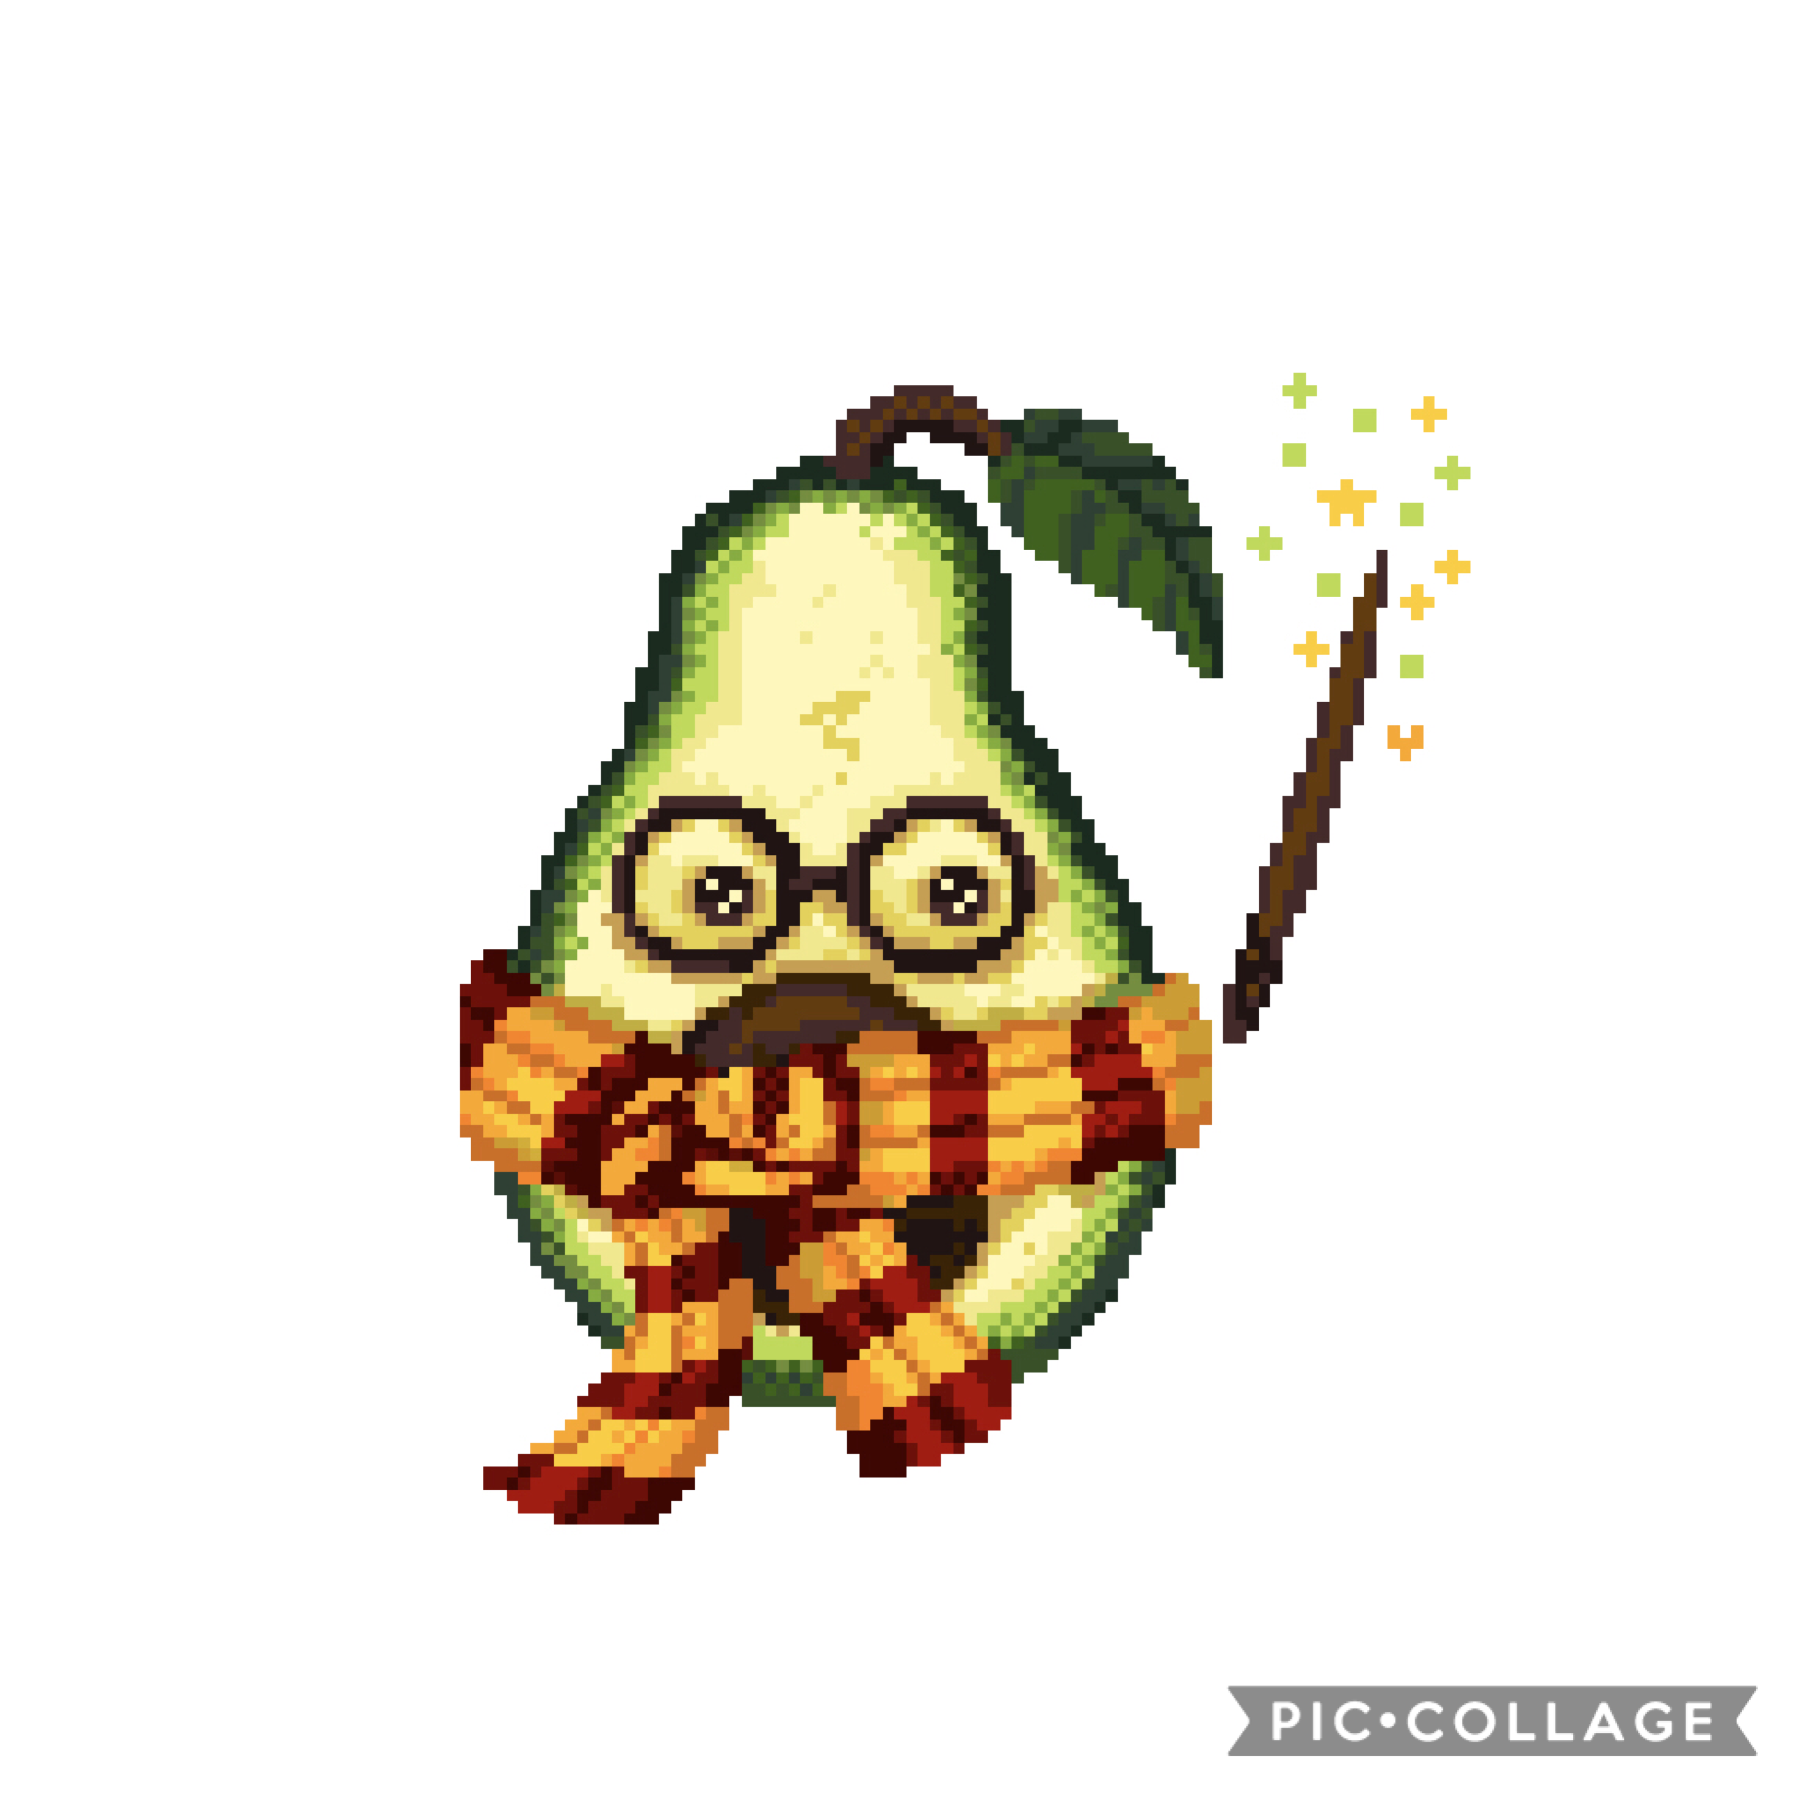 #Avocado #Harry Potter
Super cute avocado 🥑 Harry Potter mixed together!! xx